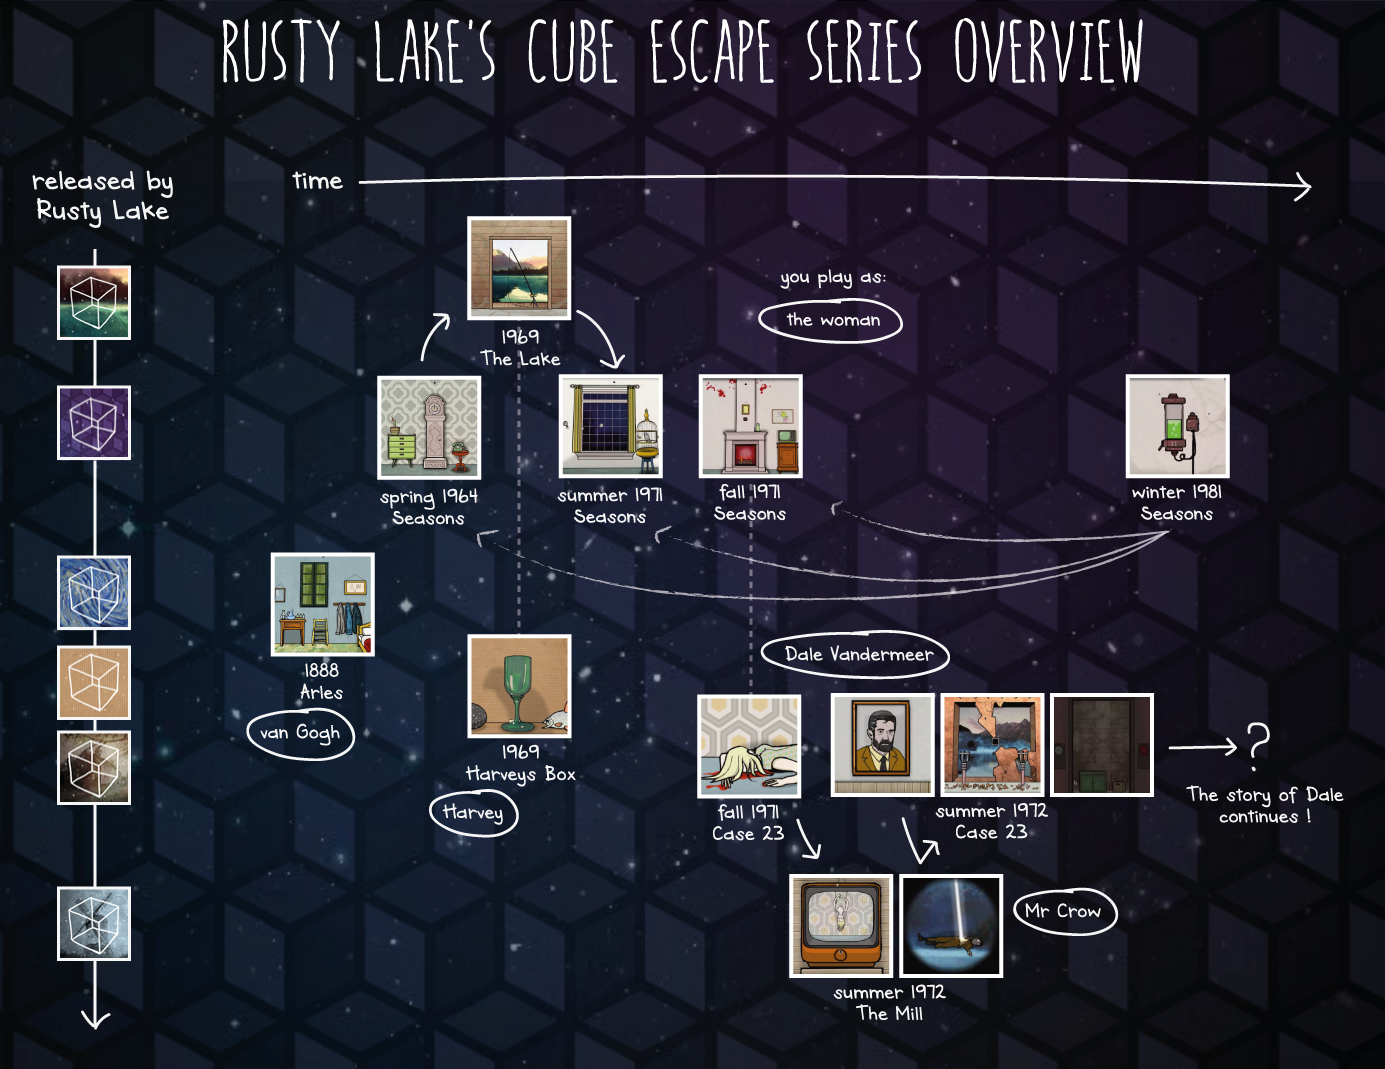 rustylake-cube-escape-overview